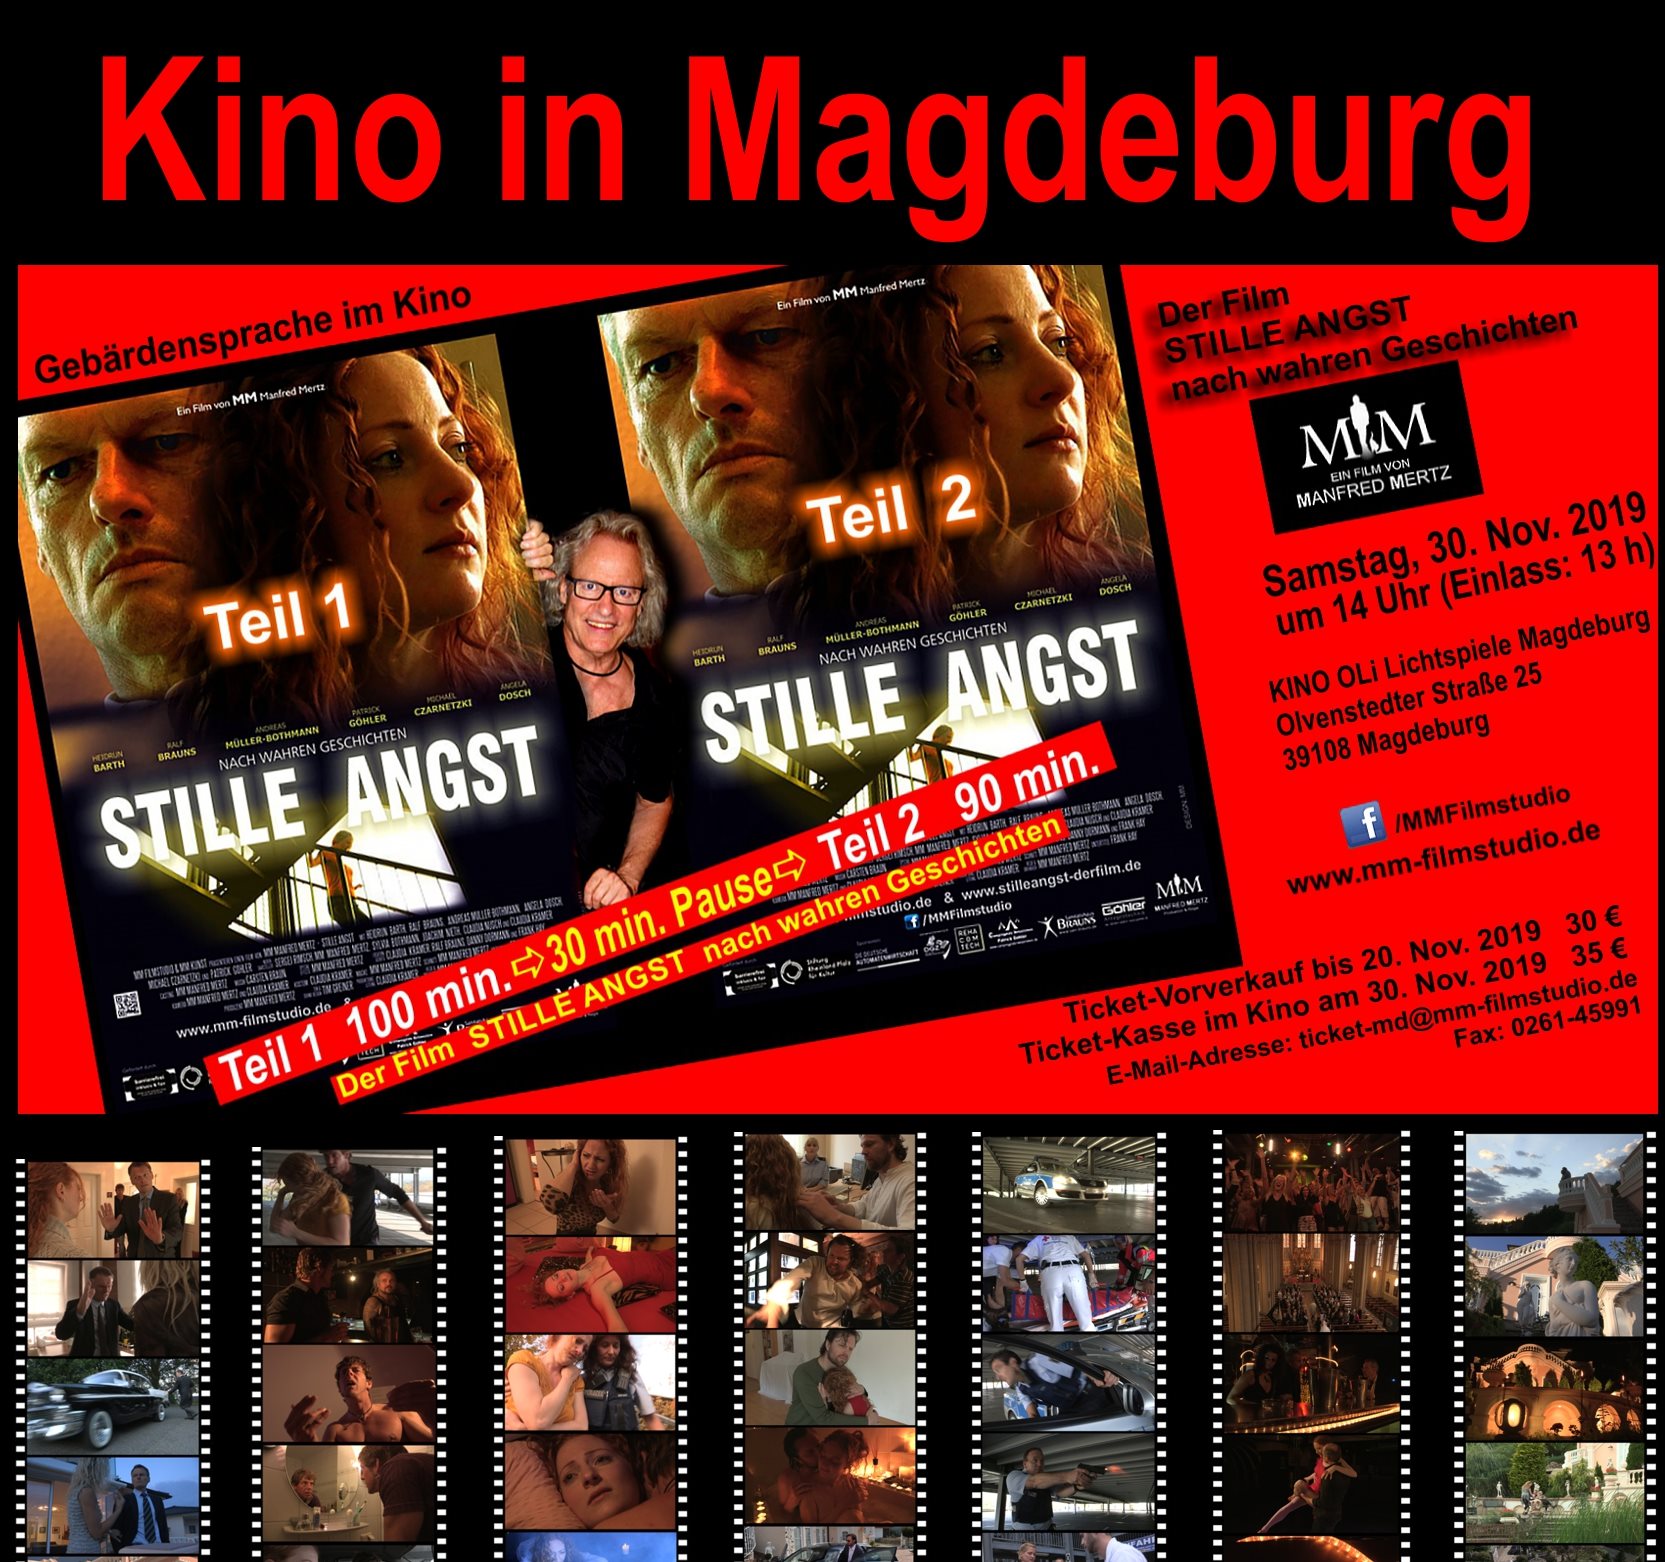 Kino in Magdeburg: Stille Angst